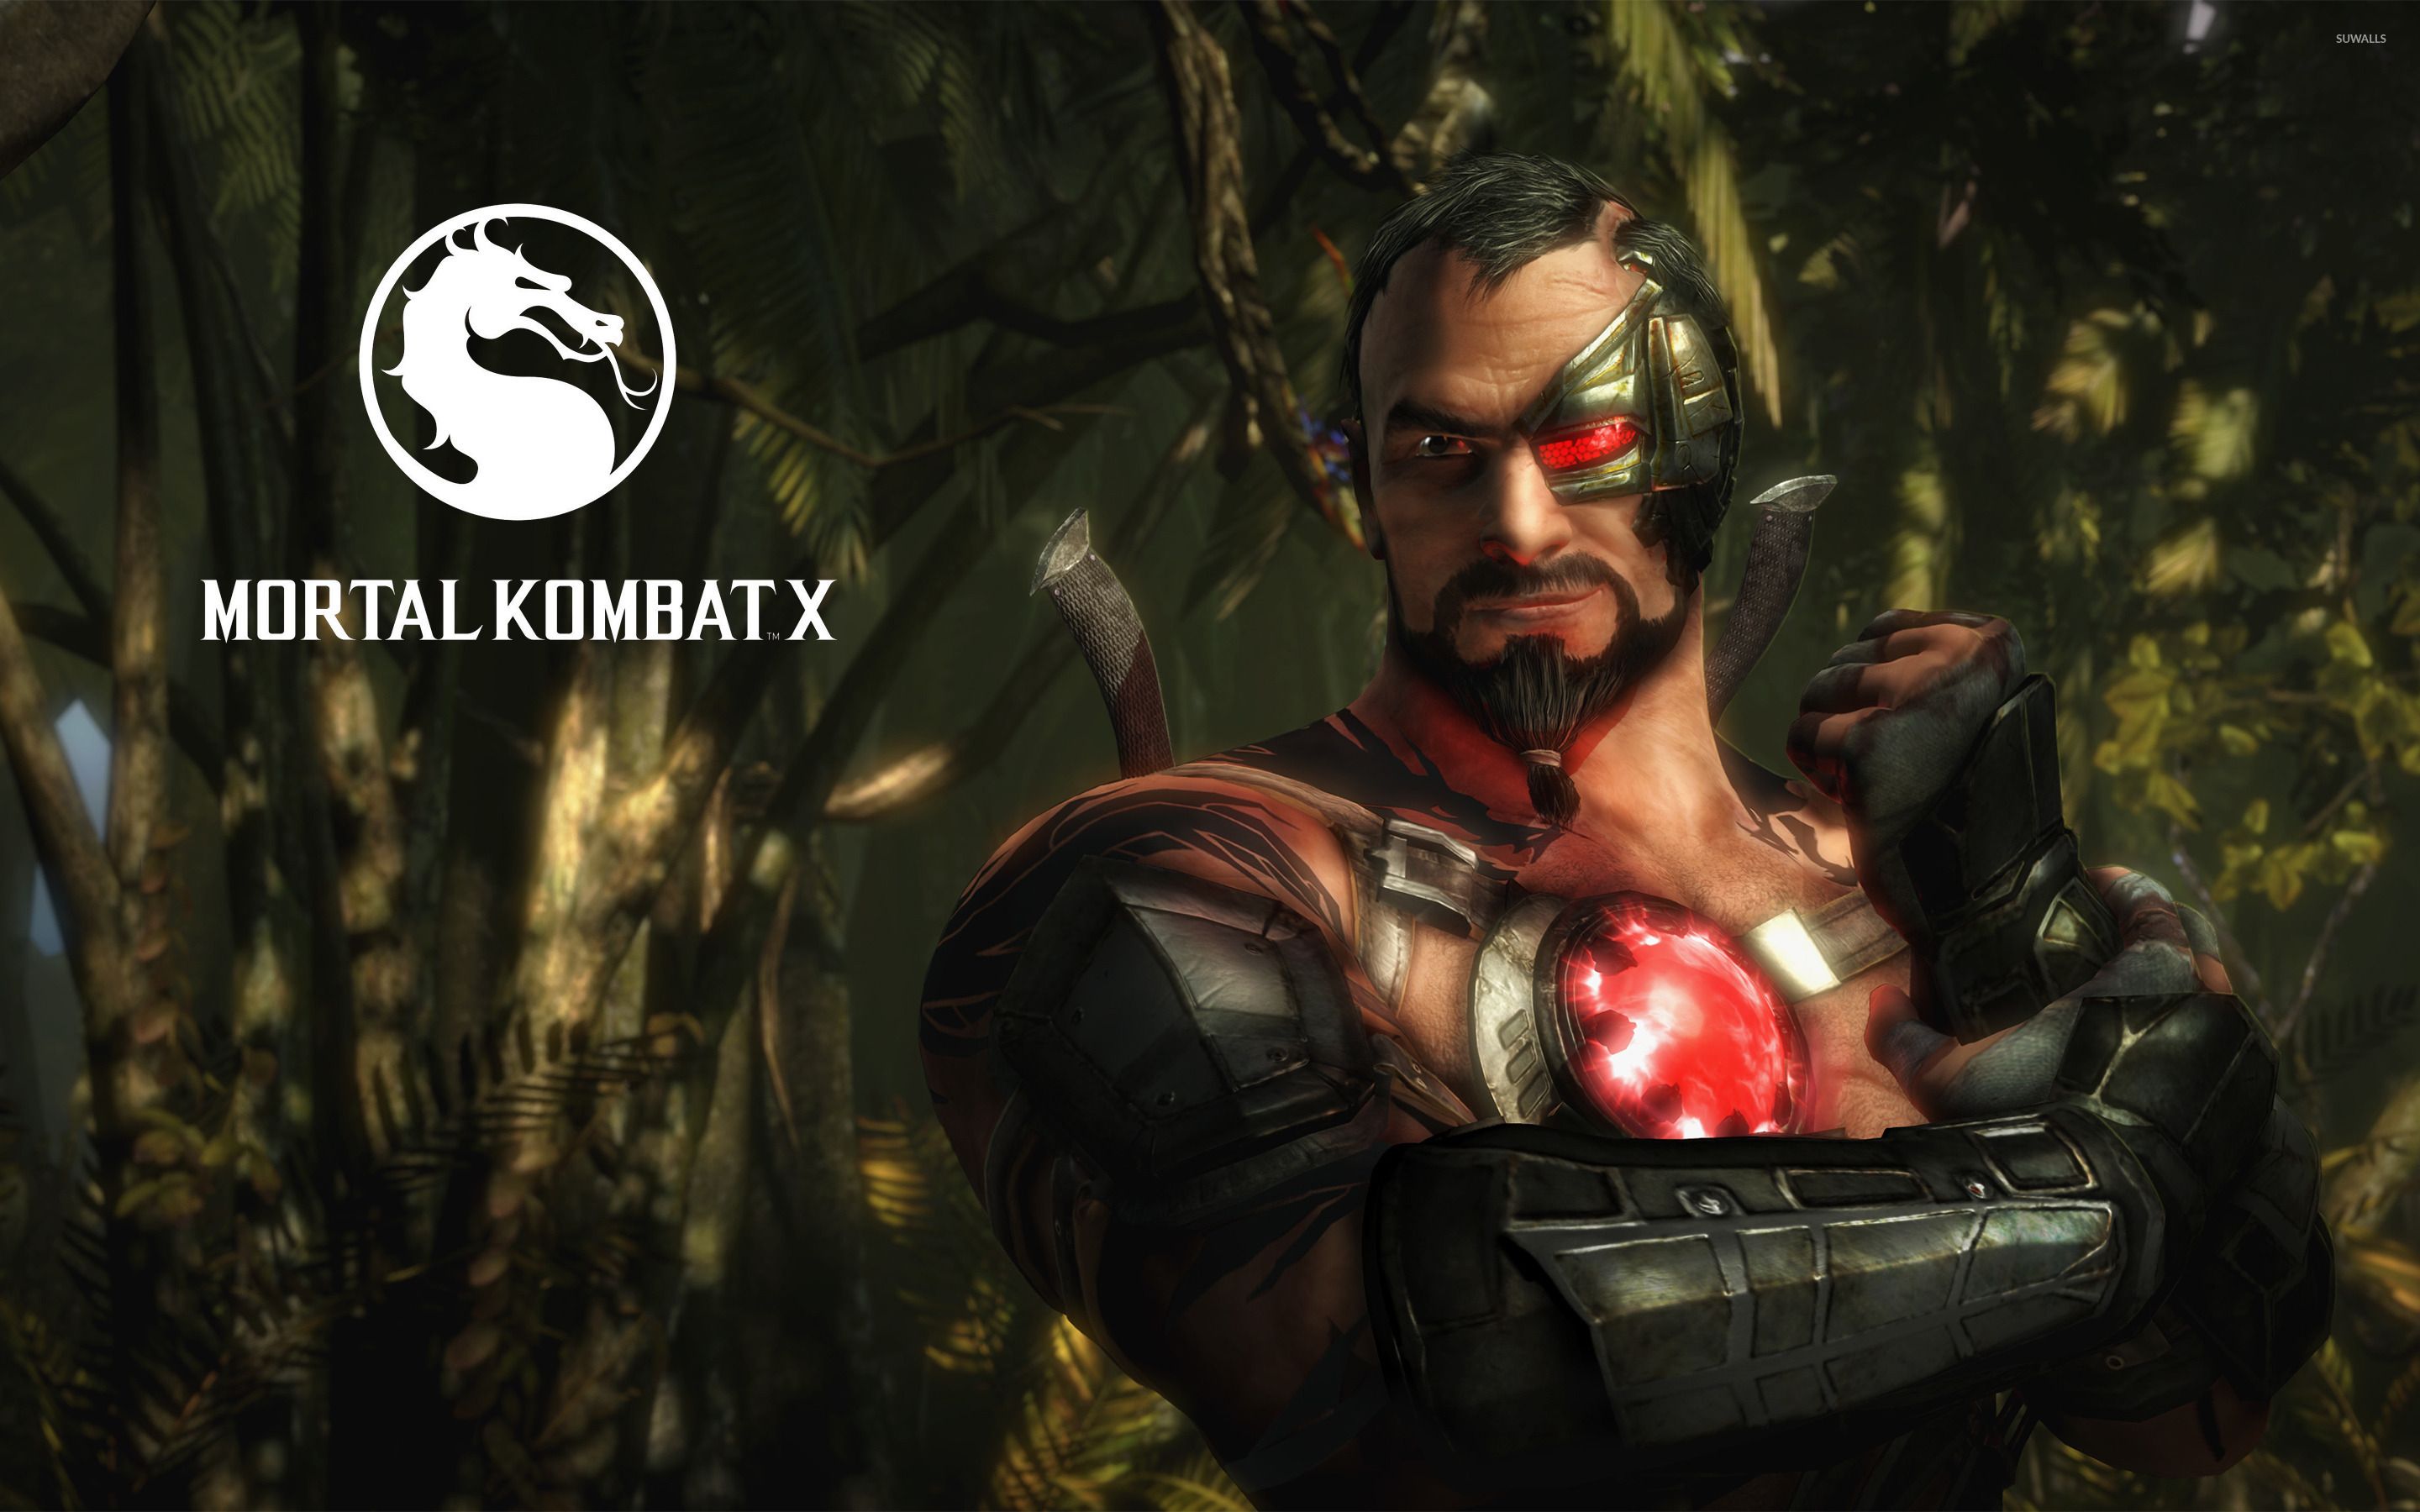 Download Mortal Kombat's Kano unleashes his power in intense battle scene  Wallpaper